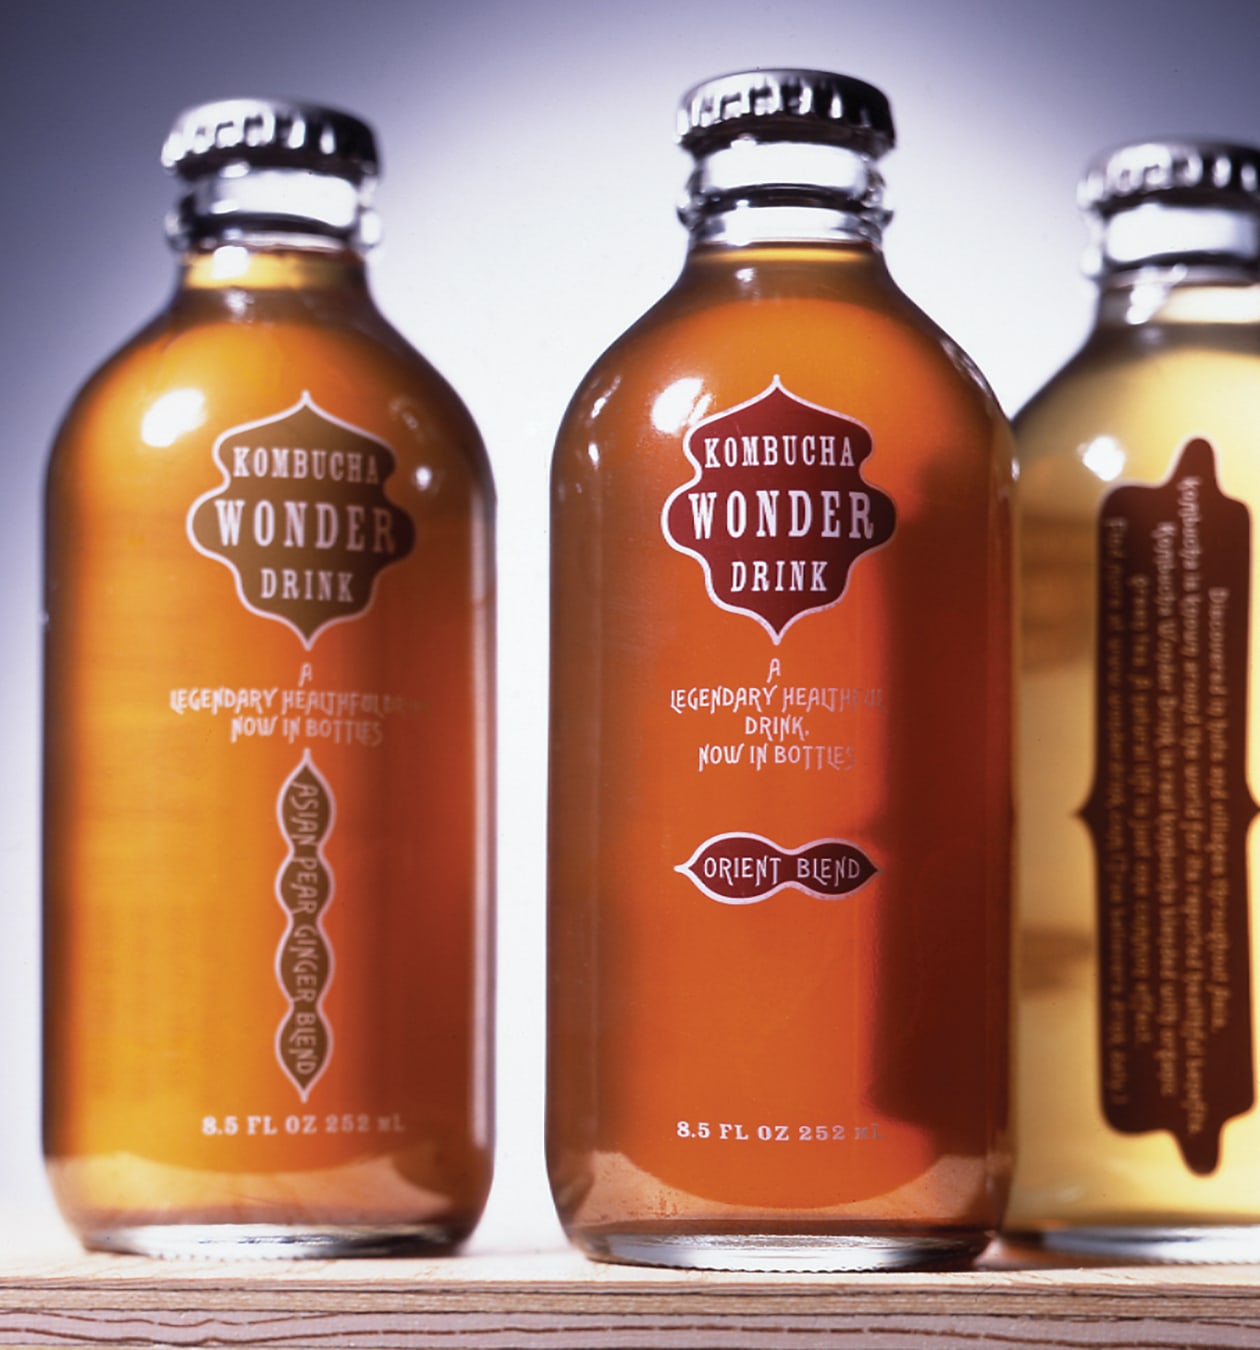 Kombucha Wonder Drink bottle packaging design